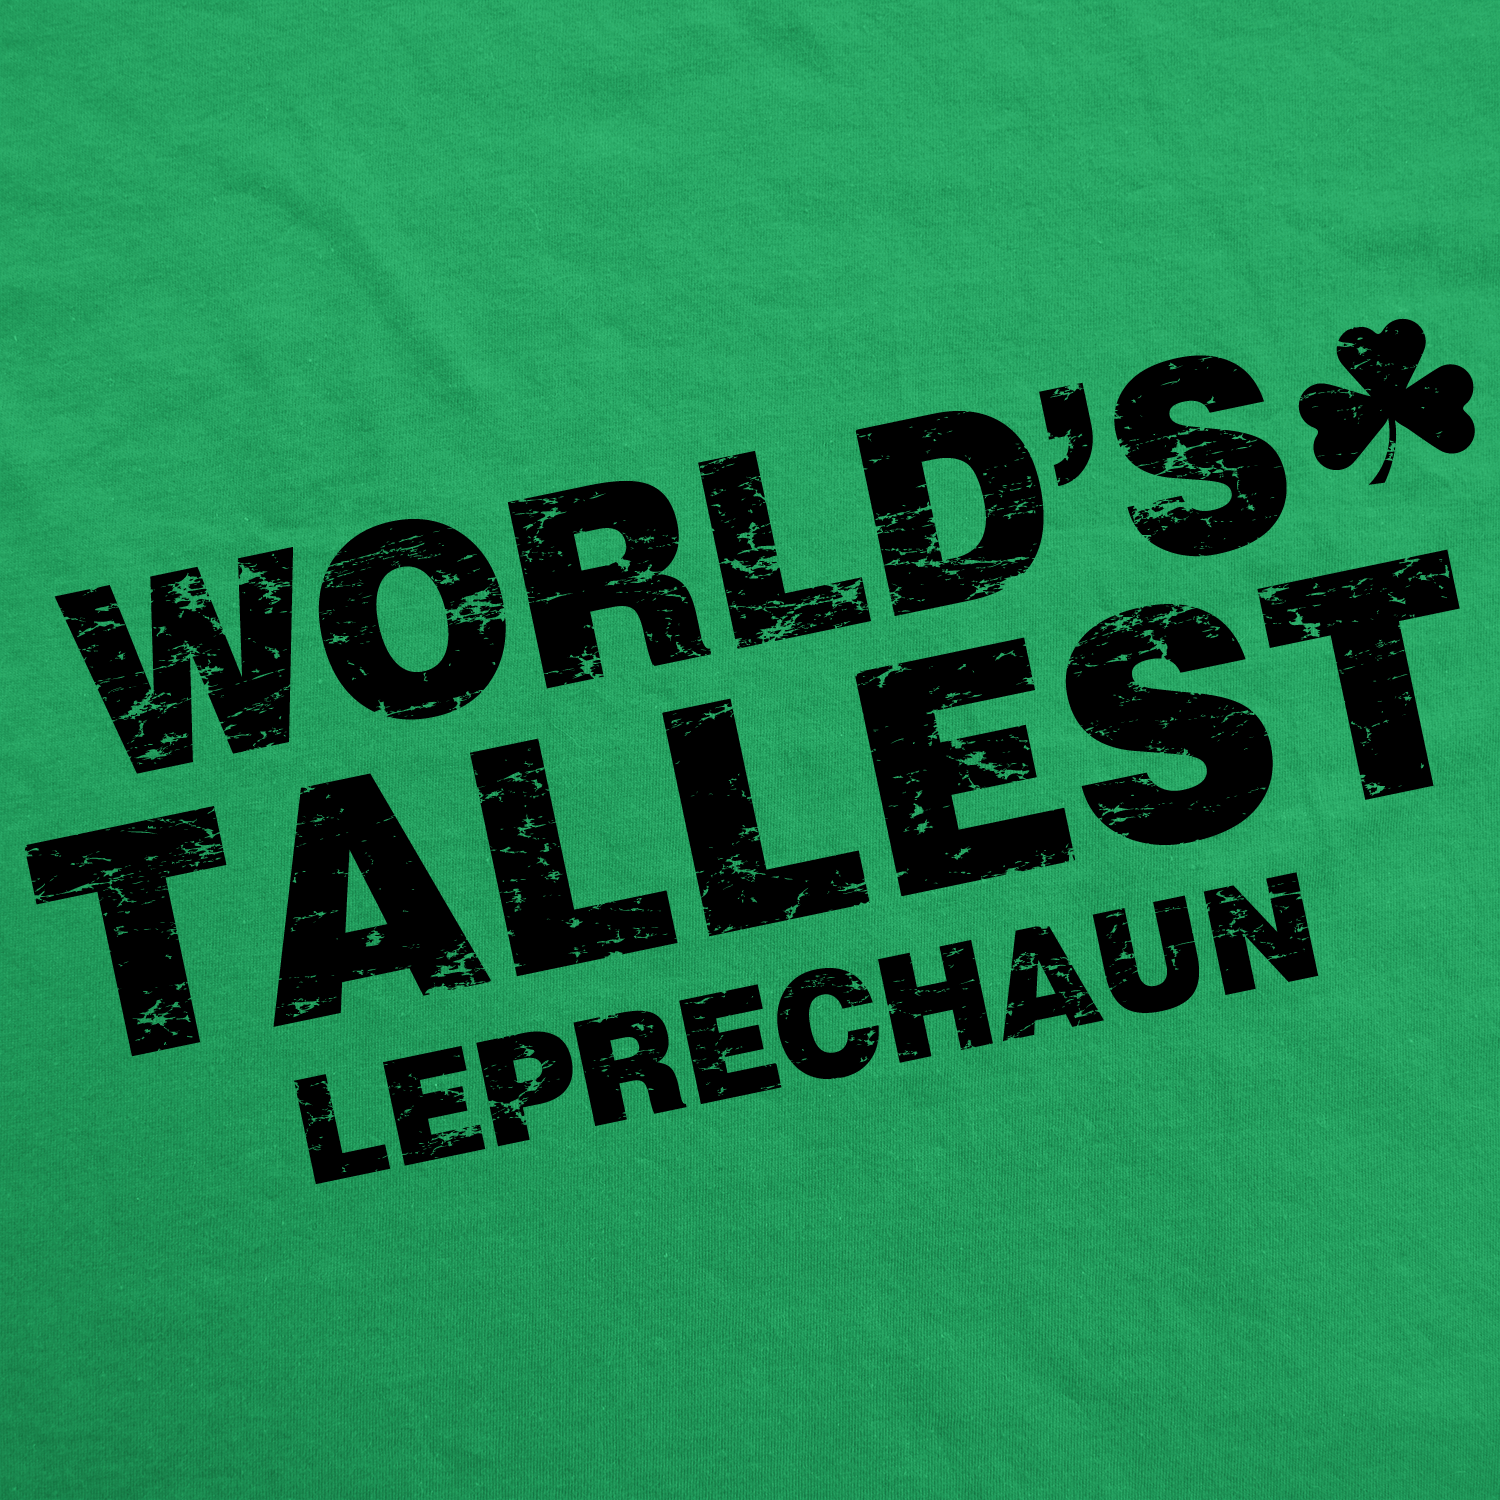 Funny Green World's Tallest Leprechaun Womens T Shirt Nerdy Saint Patrick's Day Tee